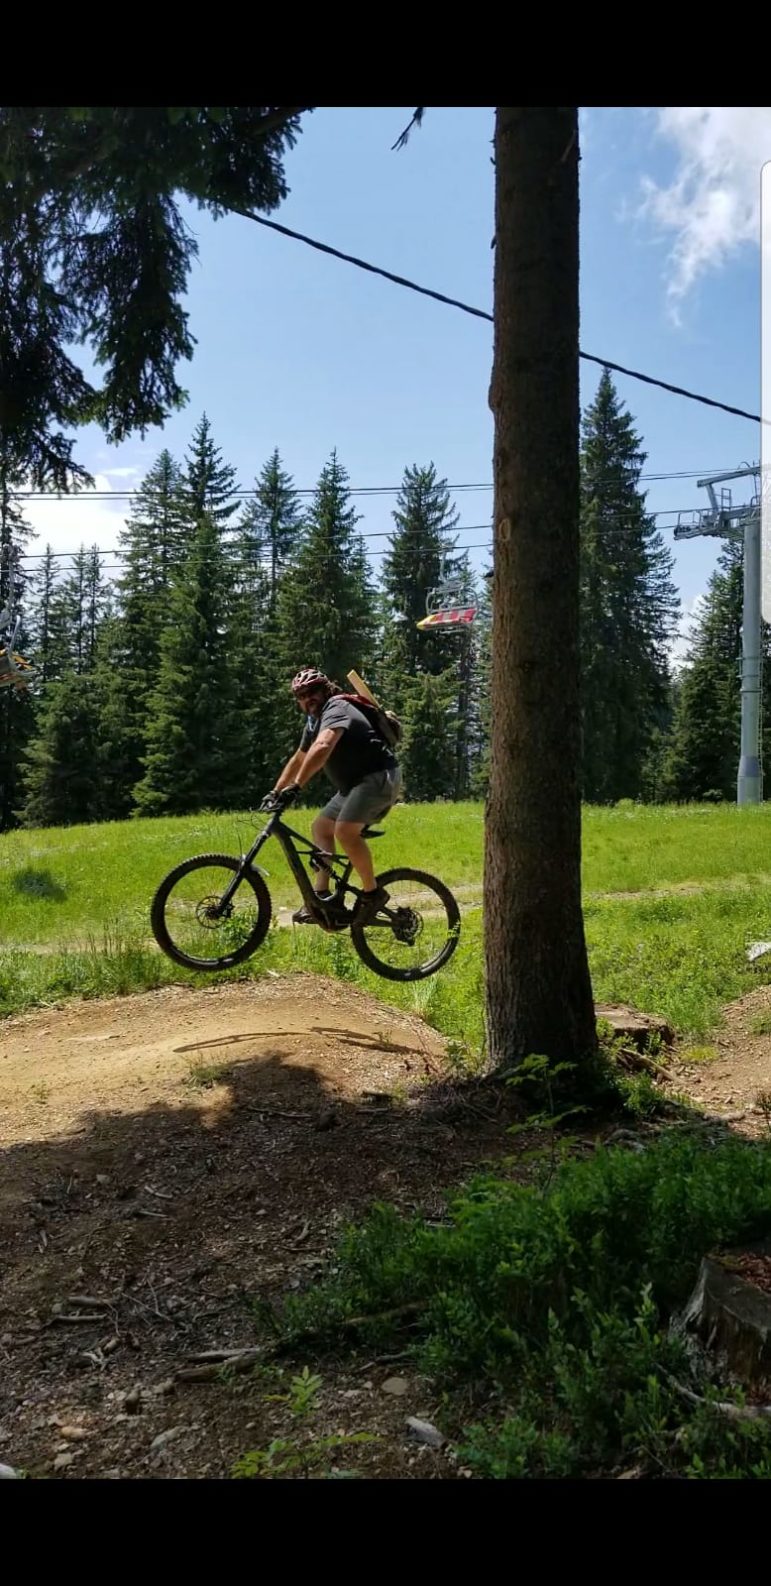 Jerry riding a mountain bike